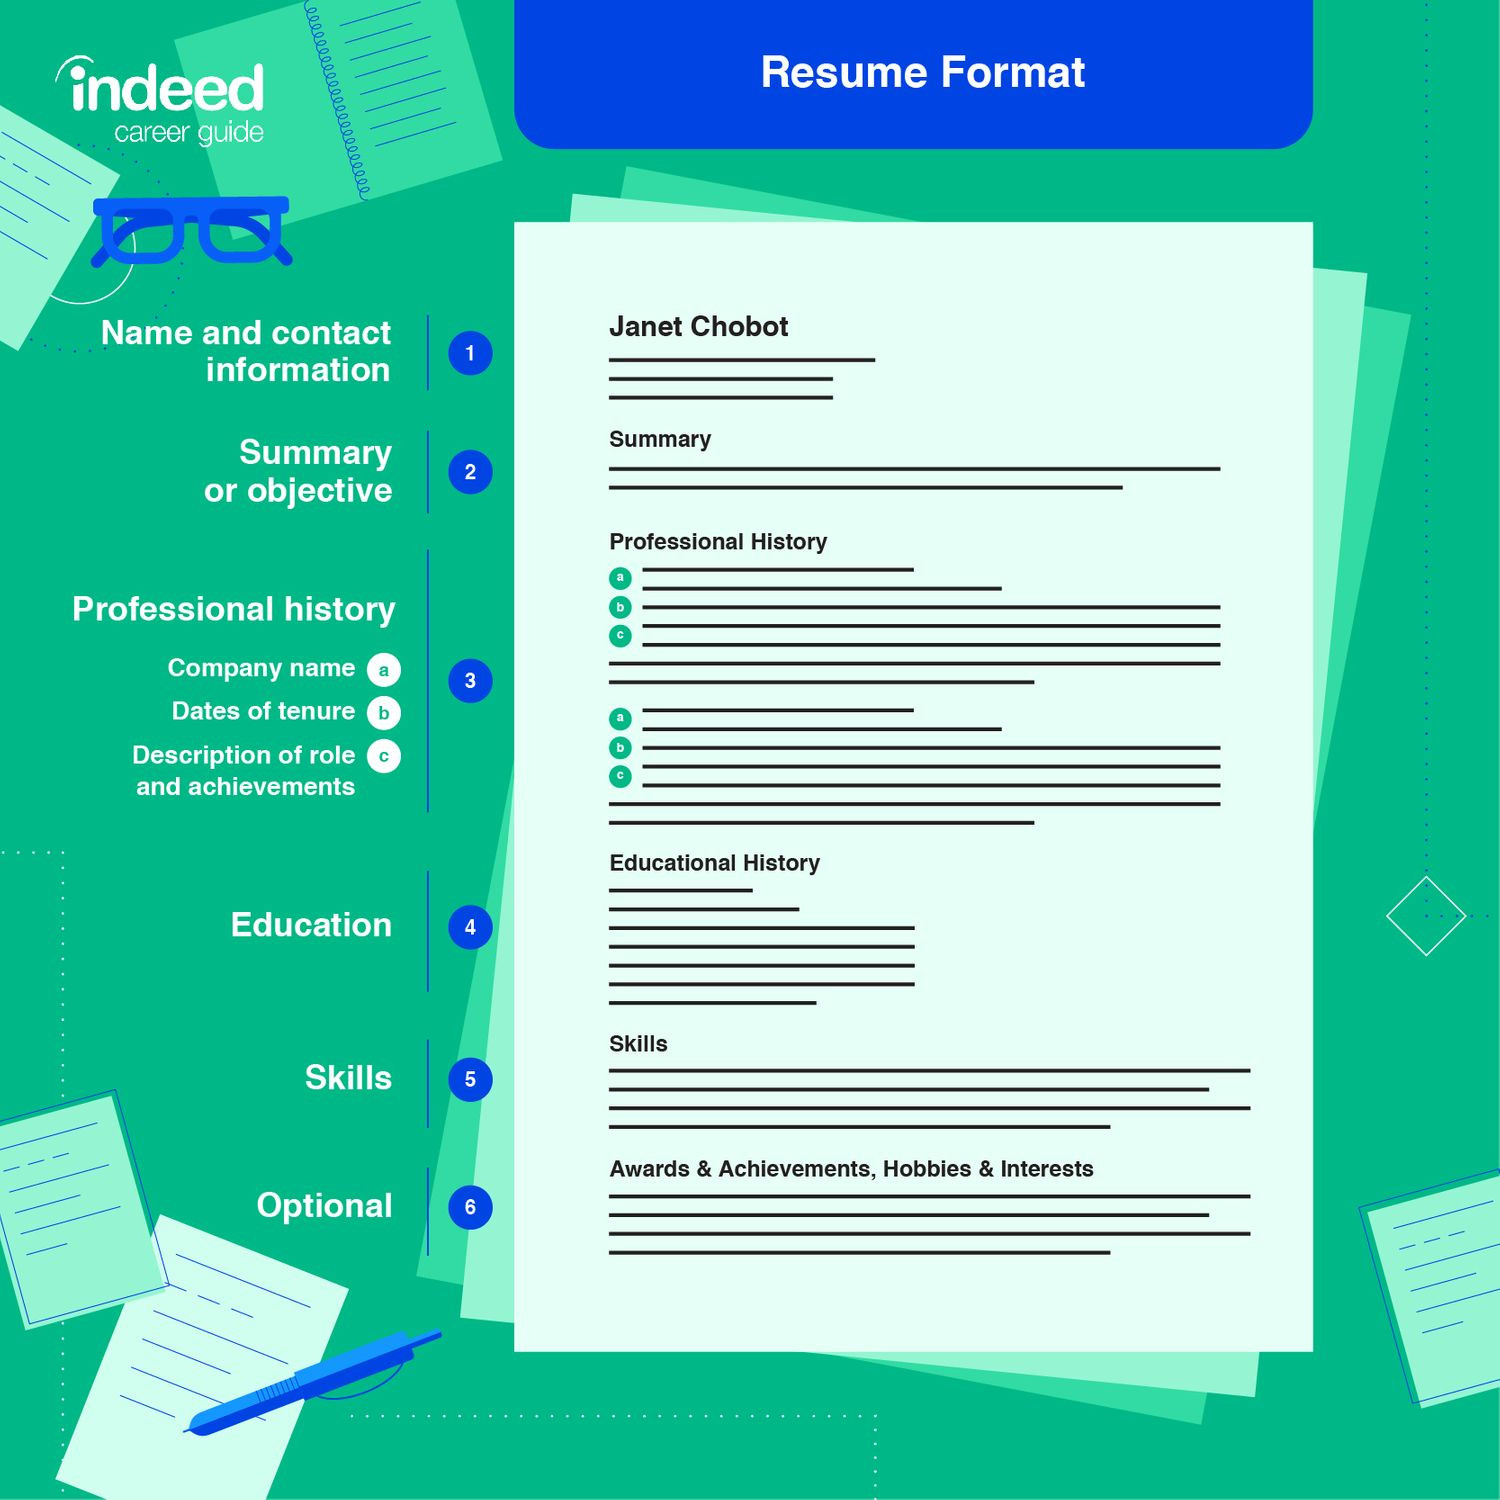 Sample Adding Volunteer Work to Resume How to Write A Volunteer Resume (with Sample and Tips) Indeed.com